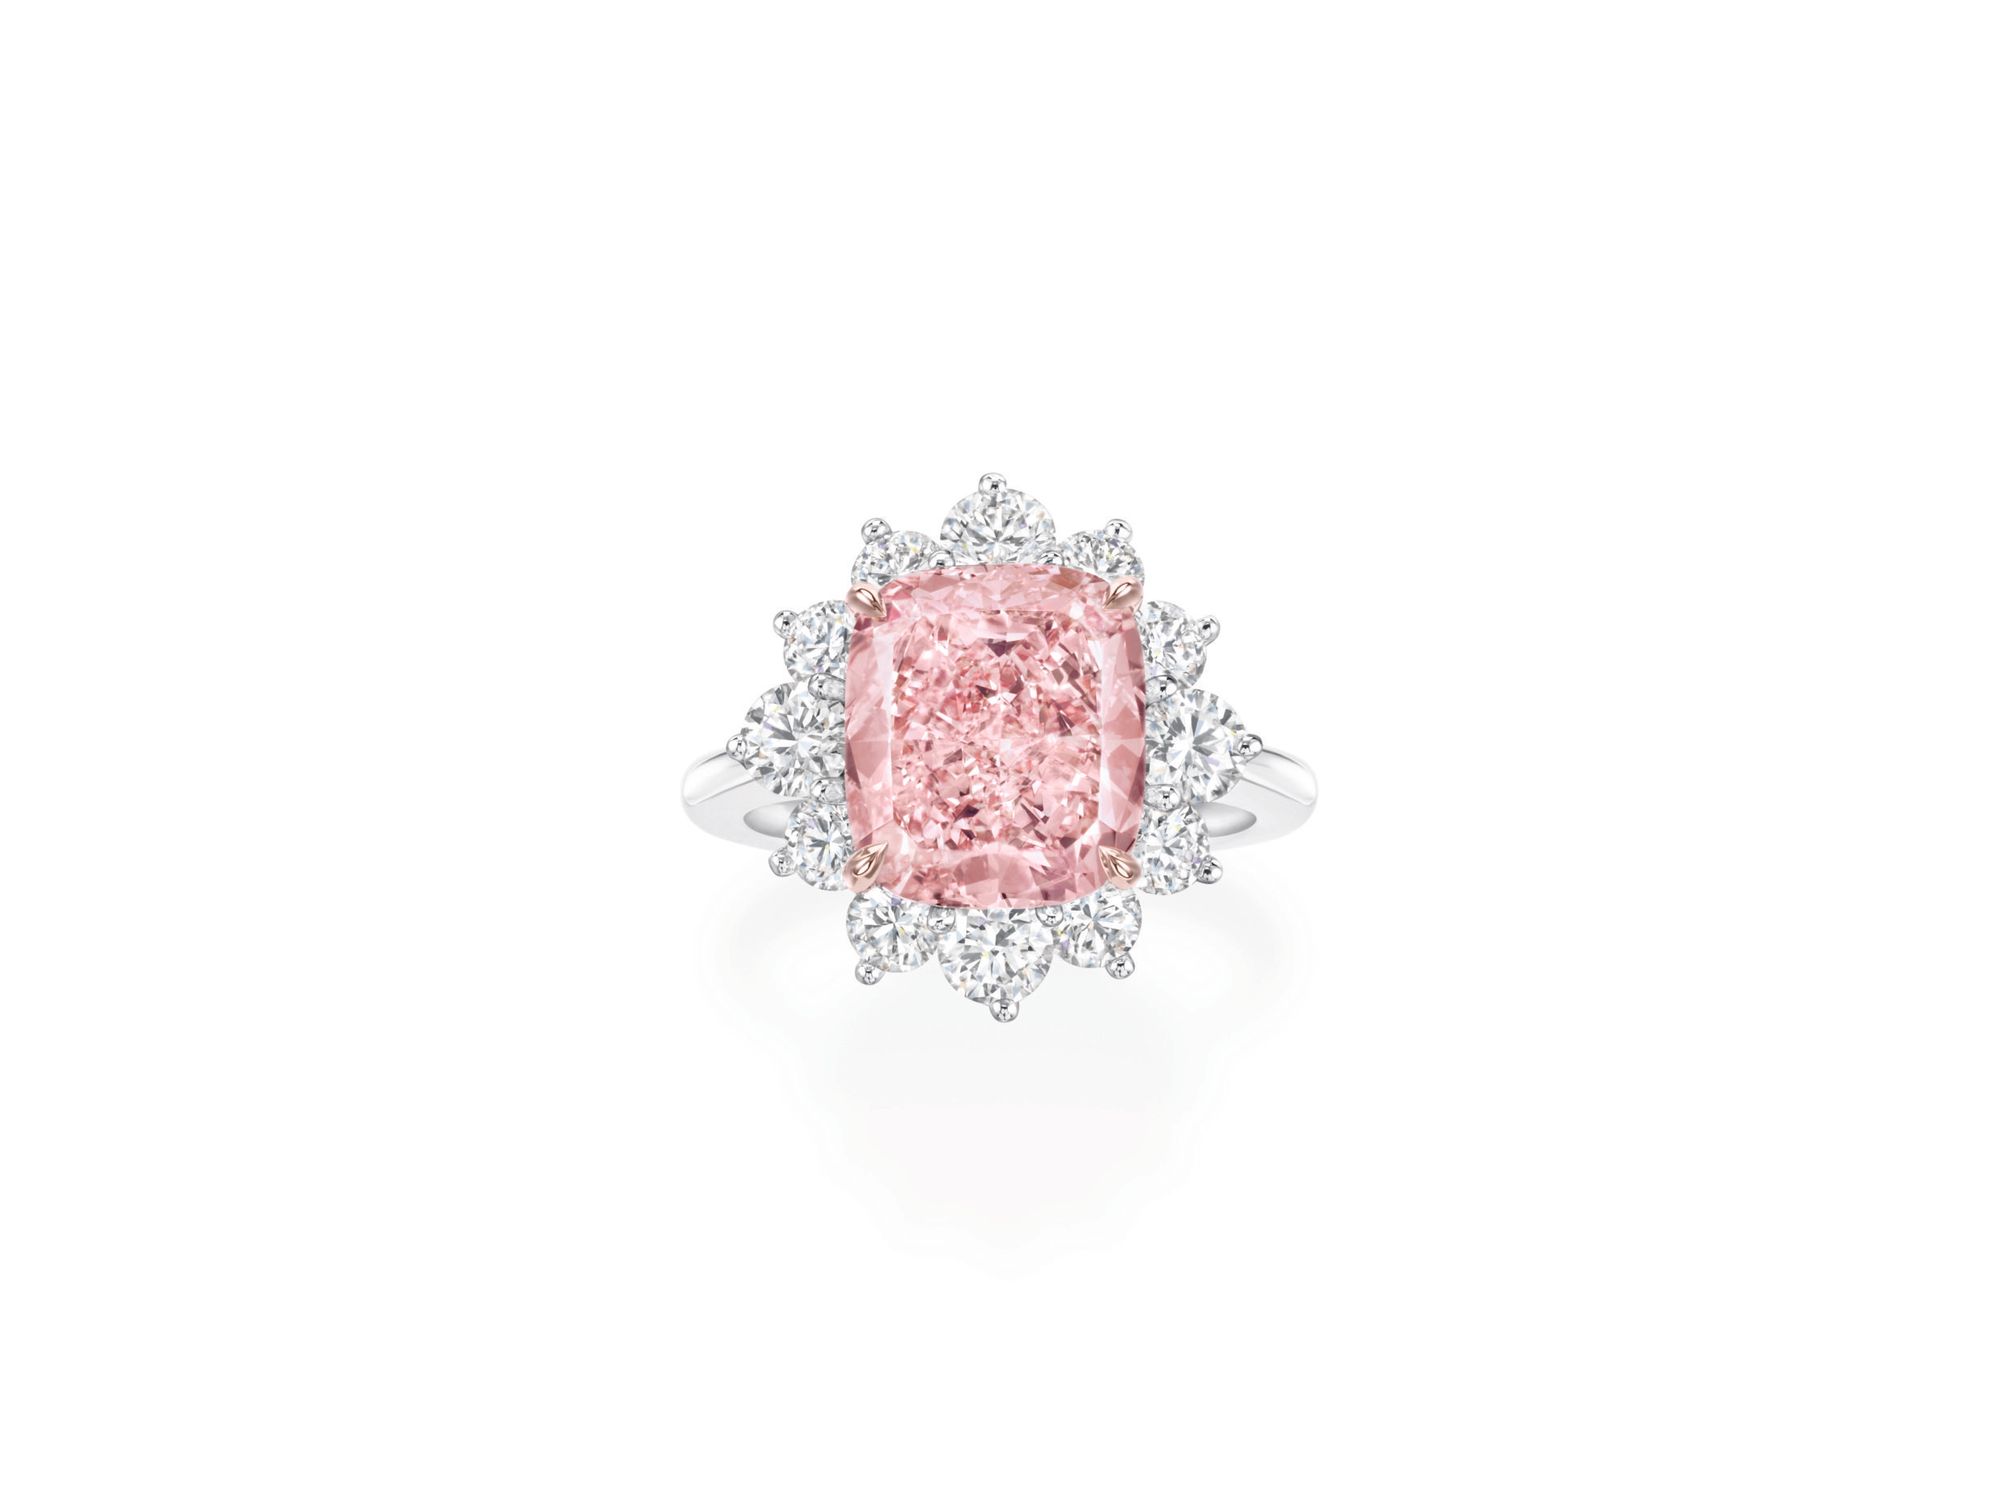 Harry Winston pink diamond ring